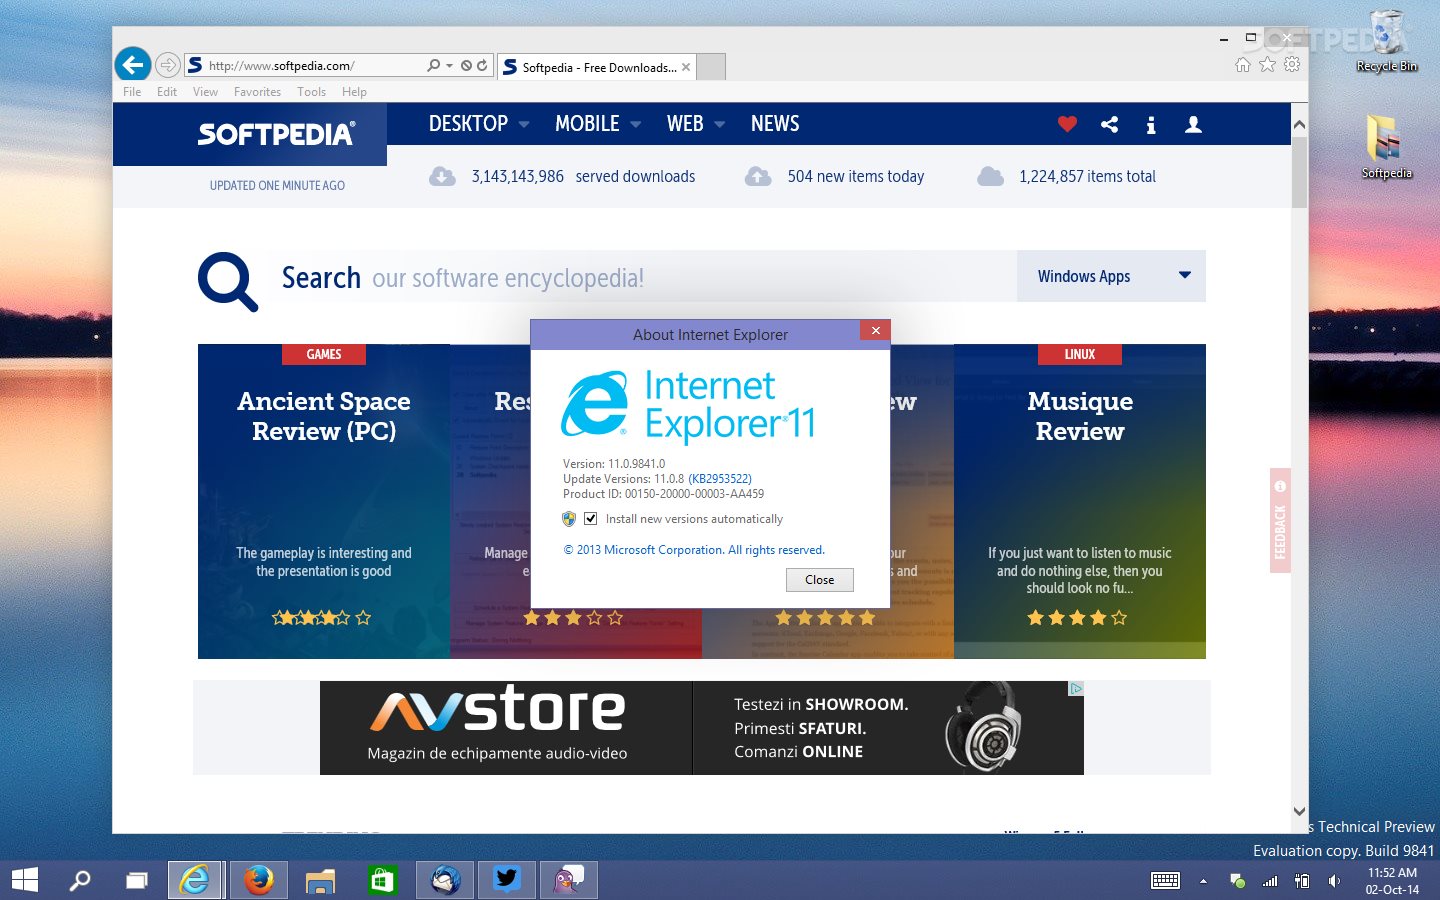 Internet Explorer 11 For Windows 10 32 Bit